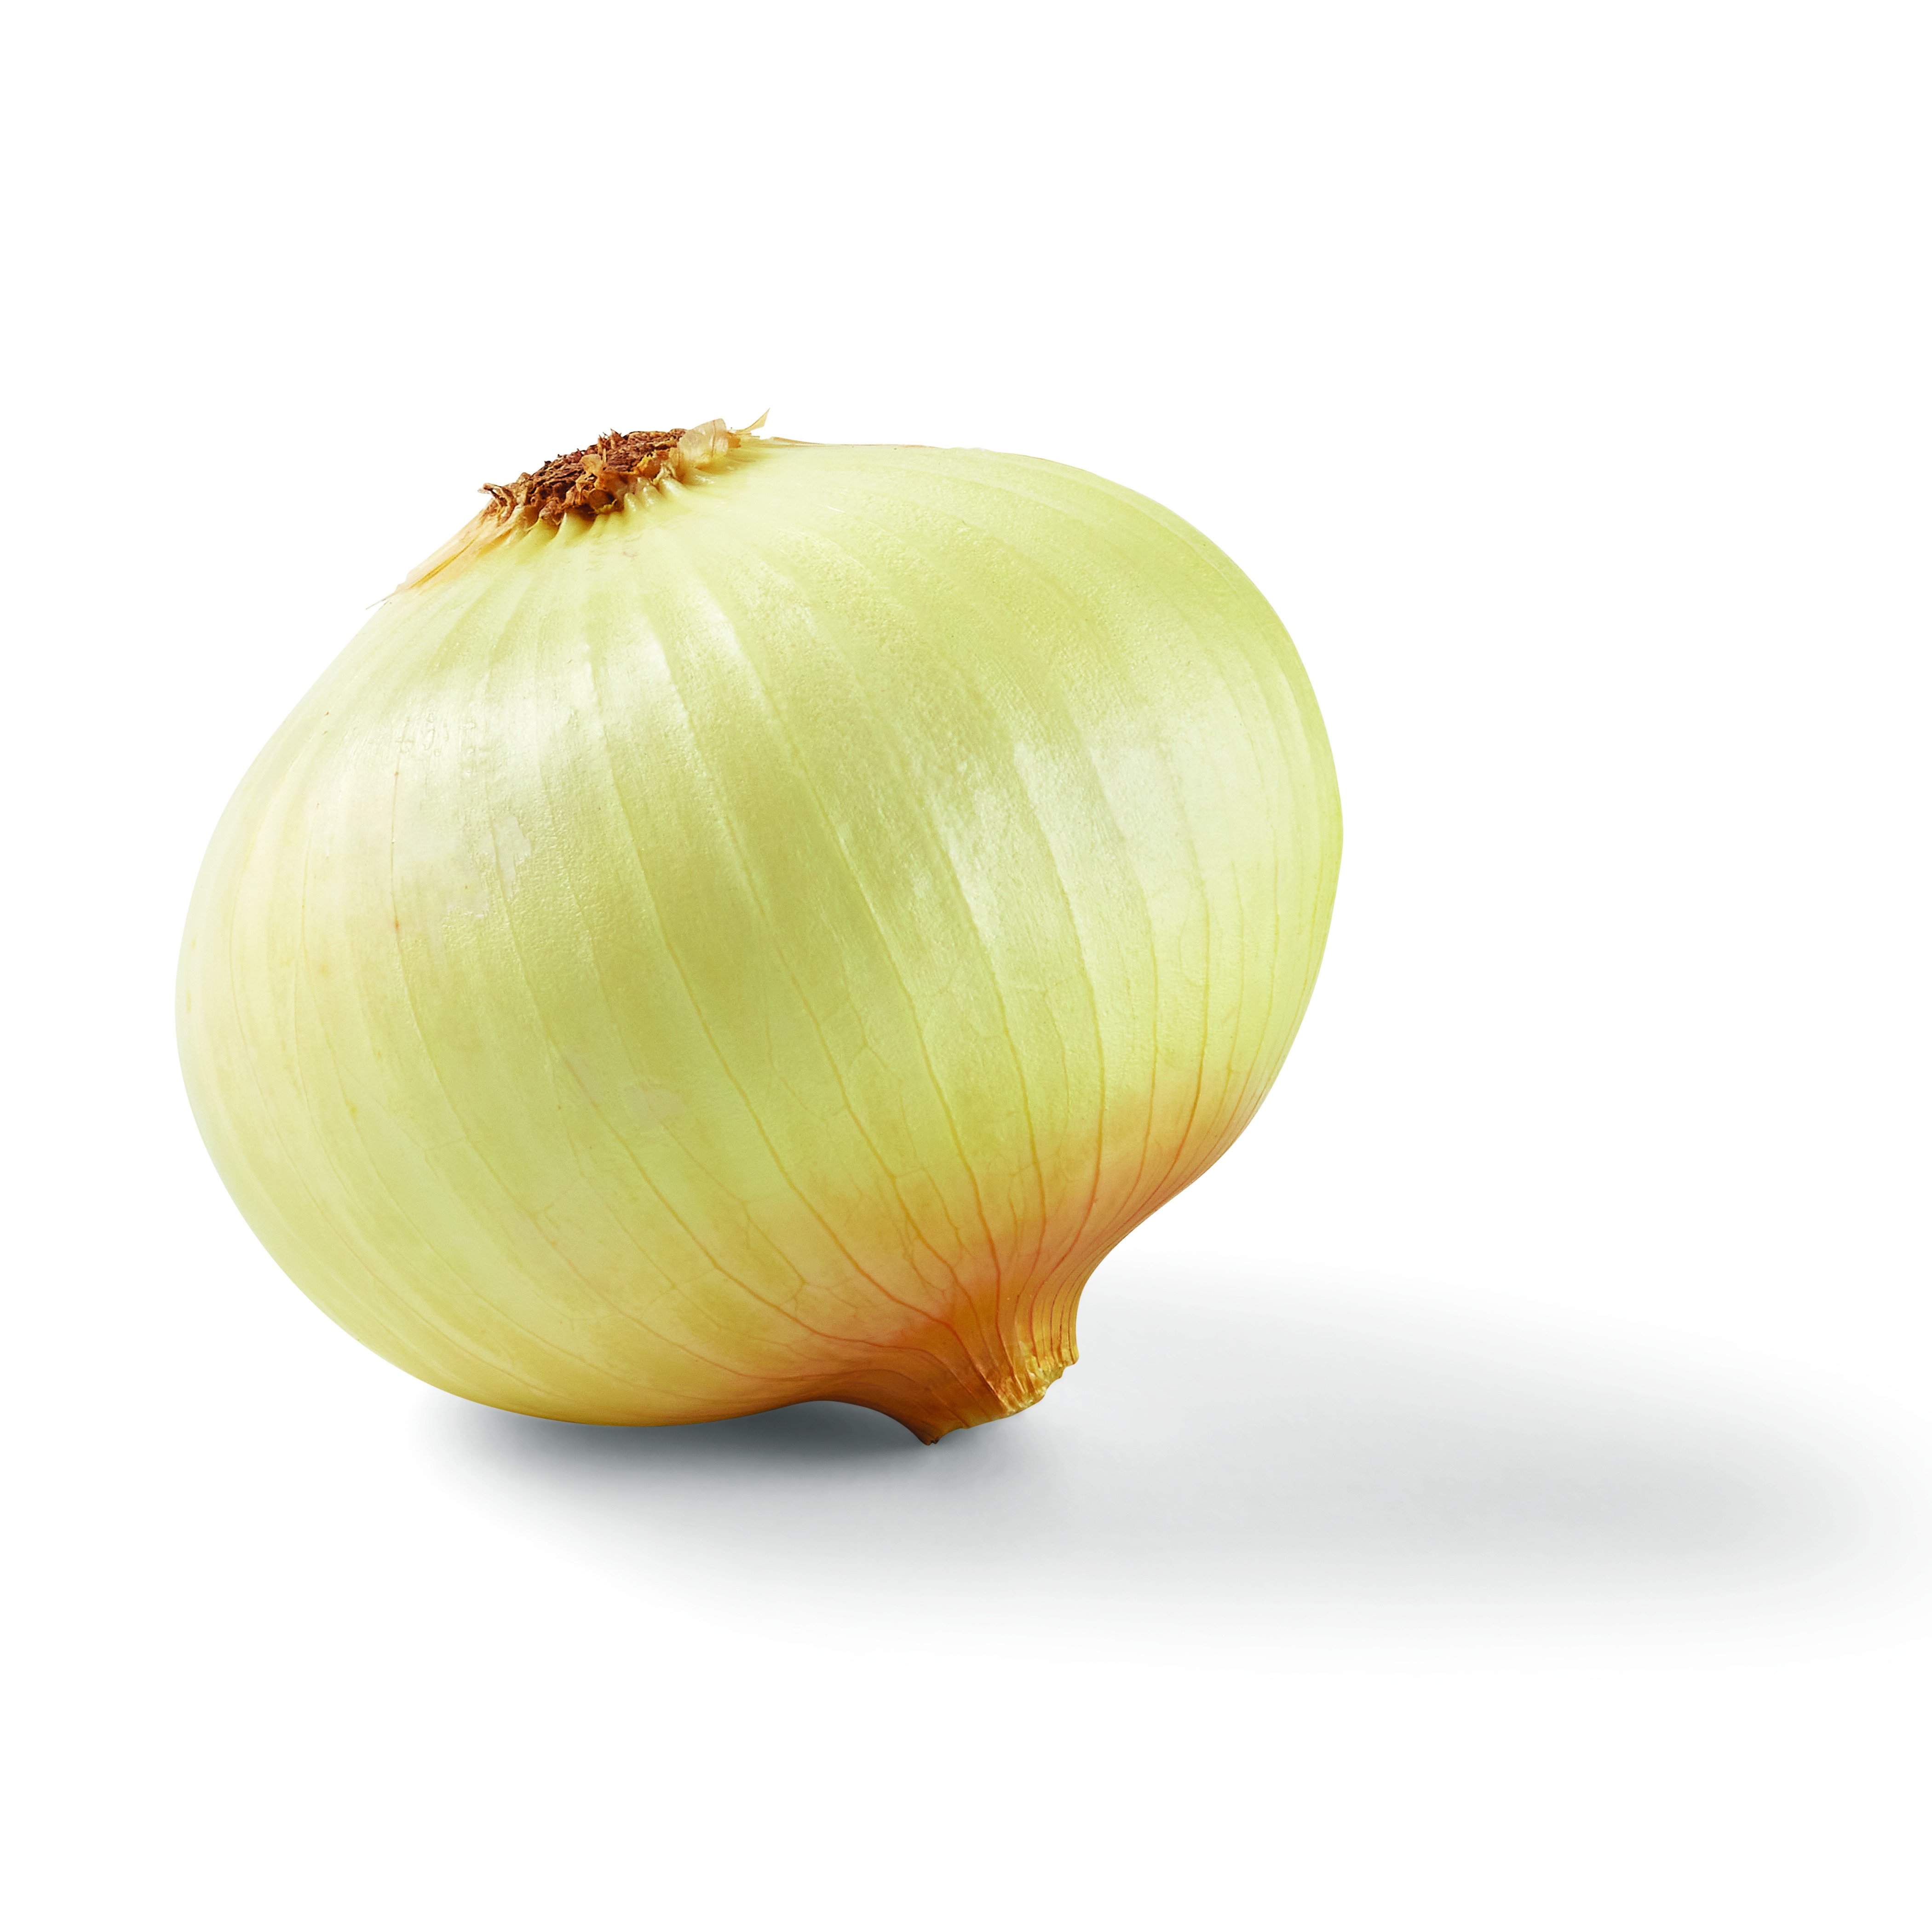 Onion Directory